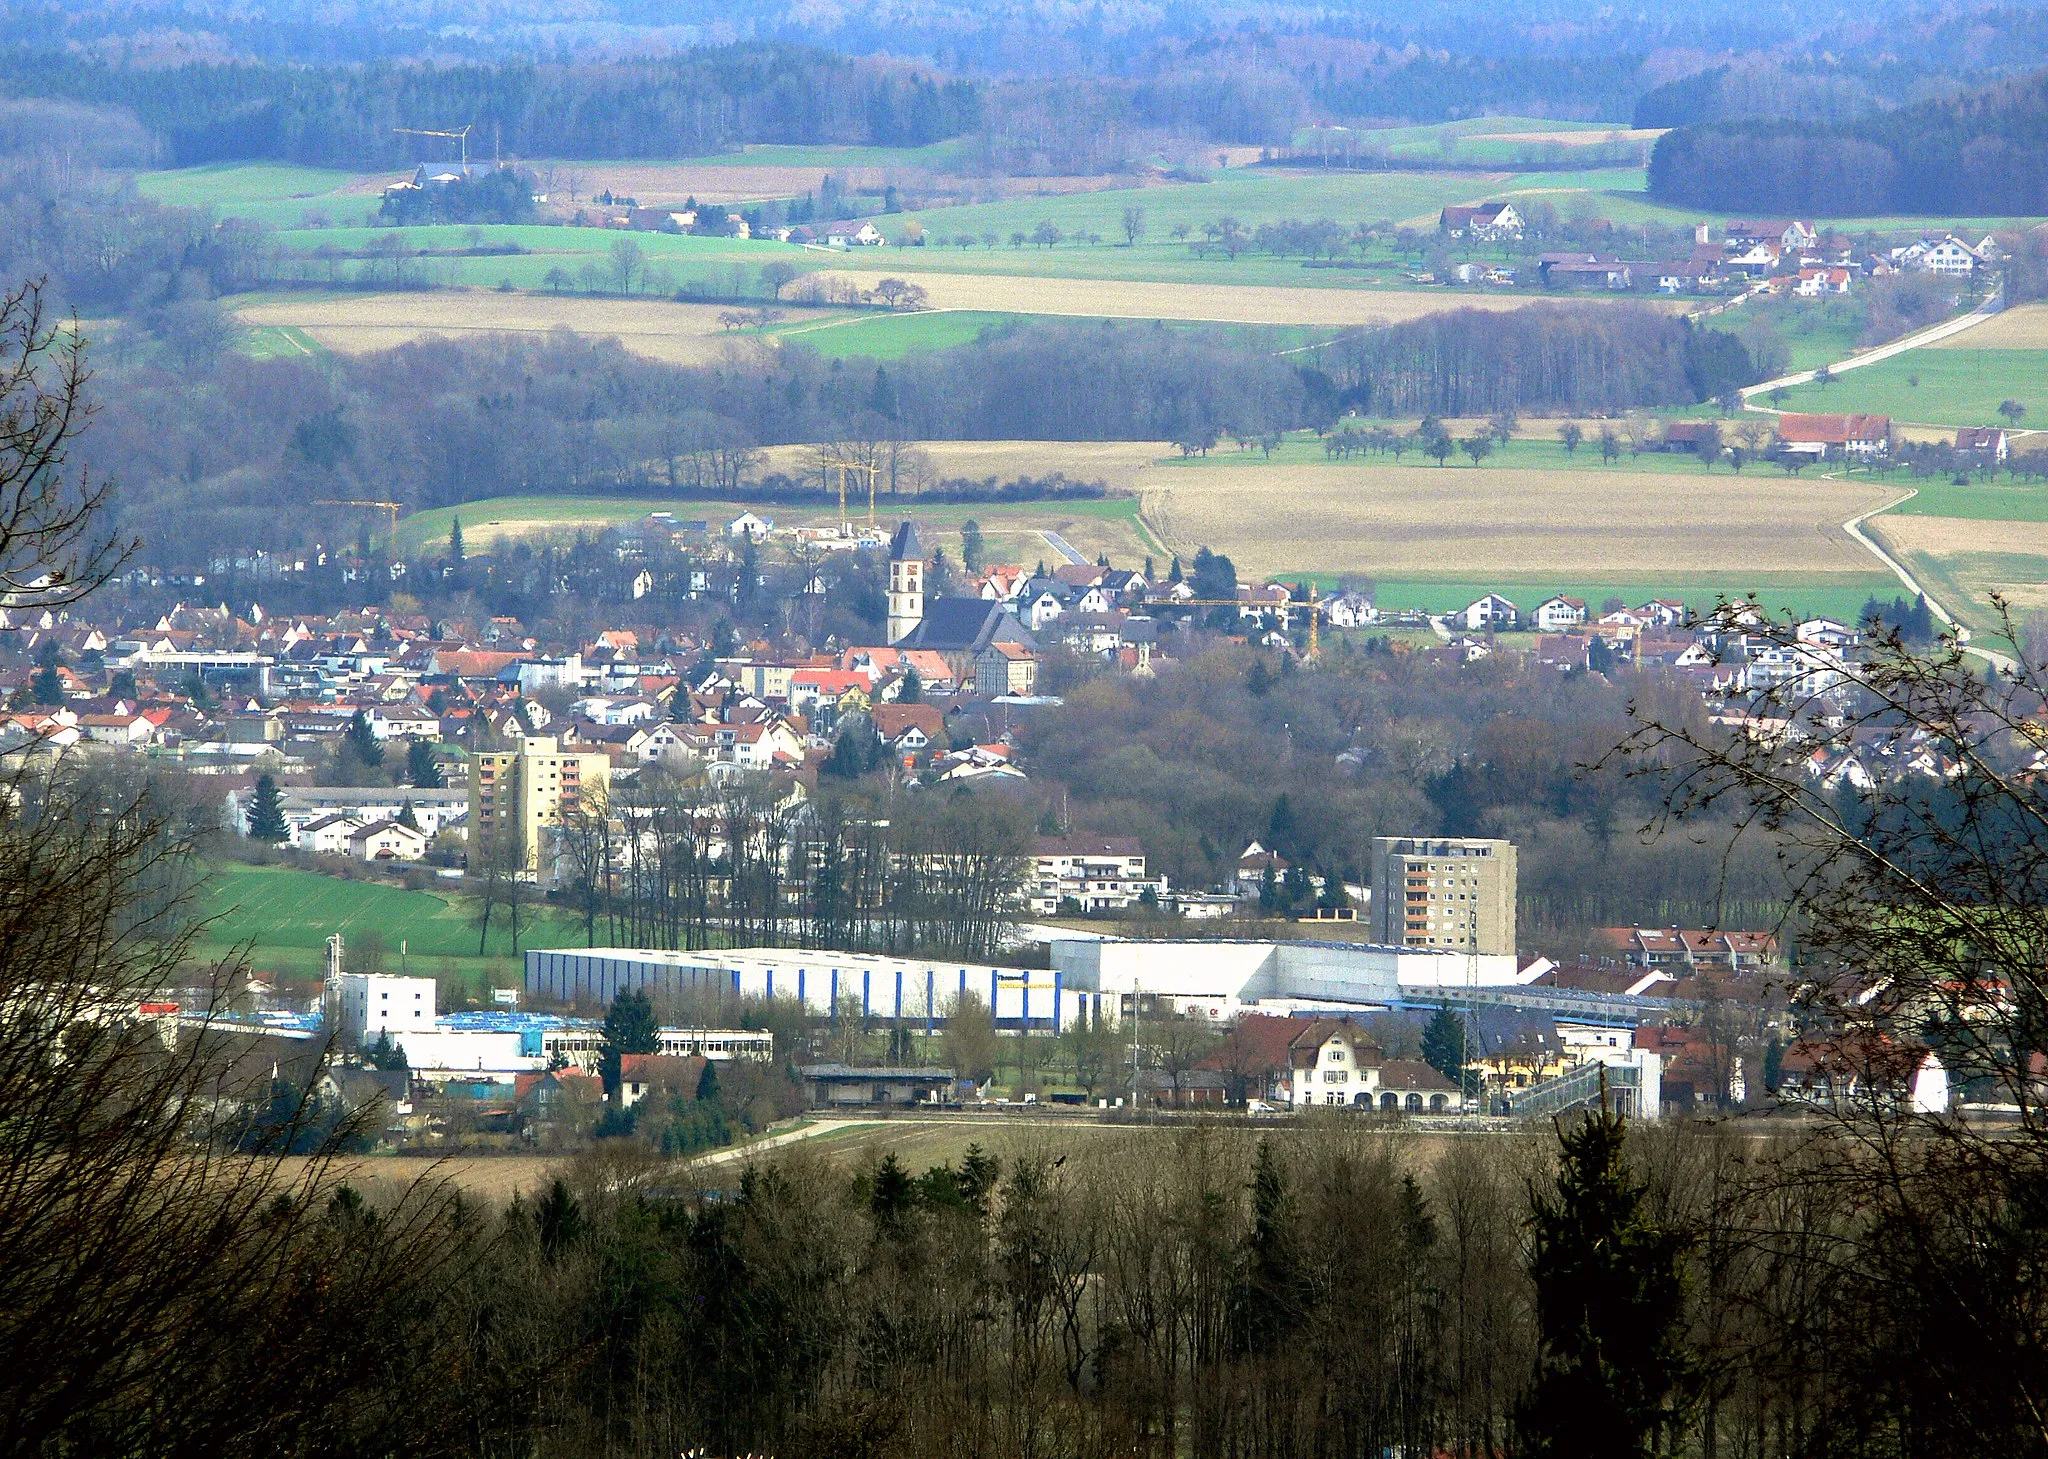 Image of Baienfurt